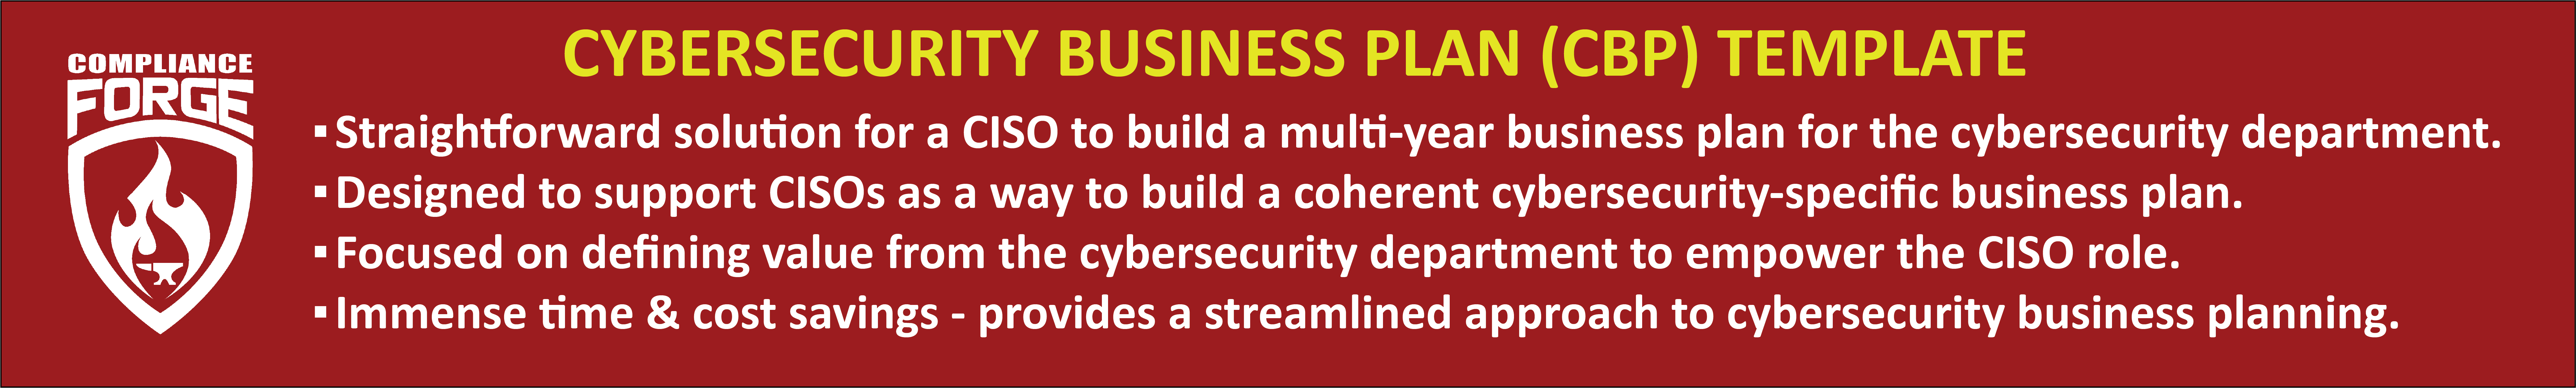 Cybersecurity Business Plan (CBP) Template